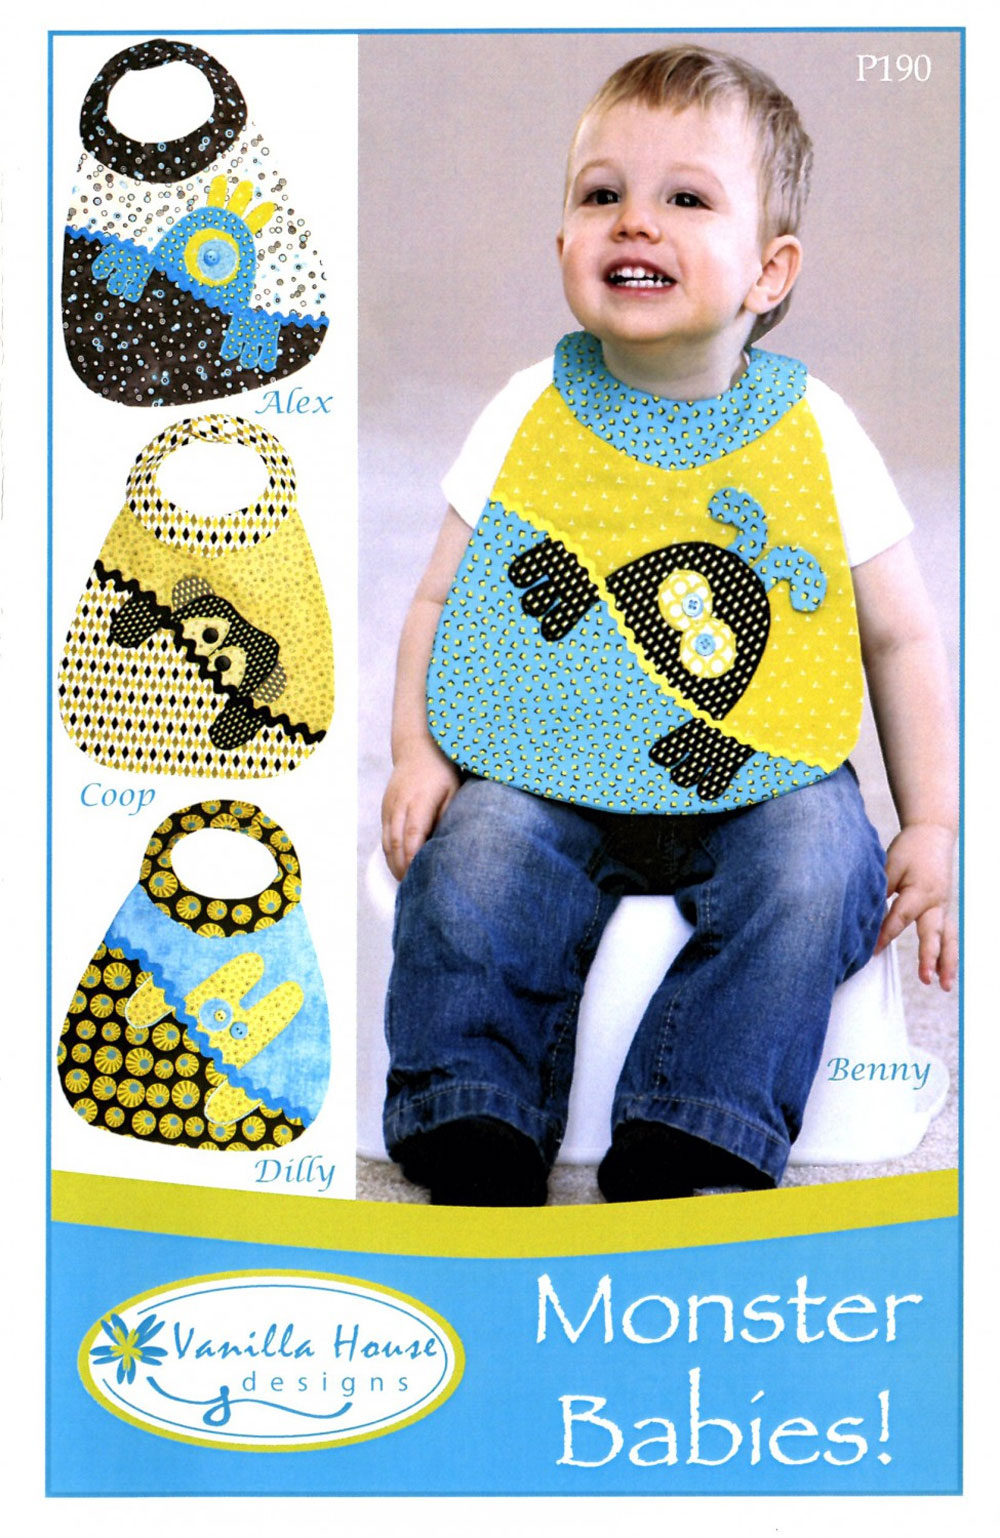 Monster-Babies-sewing-pattern-Vanilla-House-Designs-P190-front.jpg